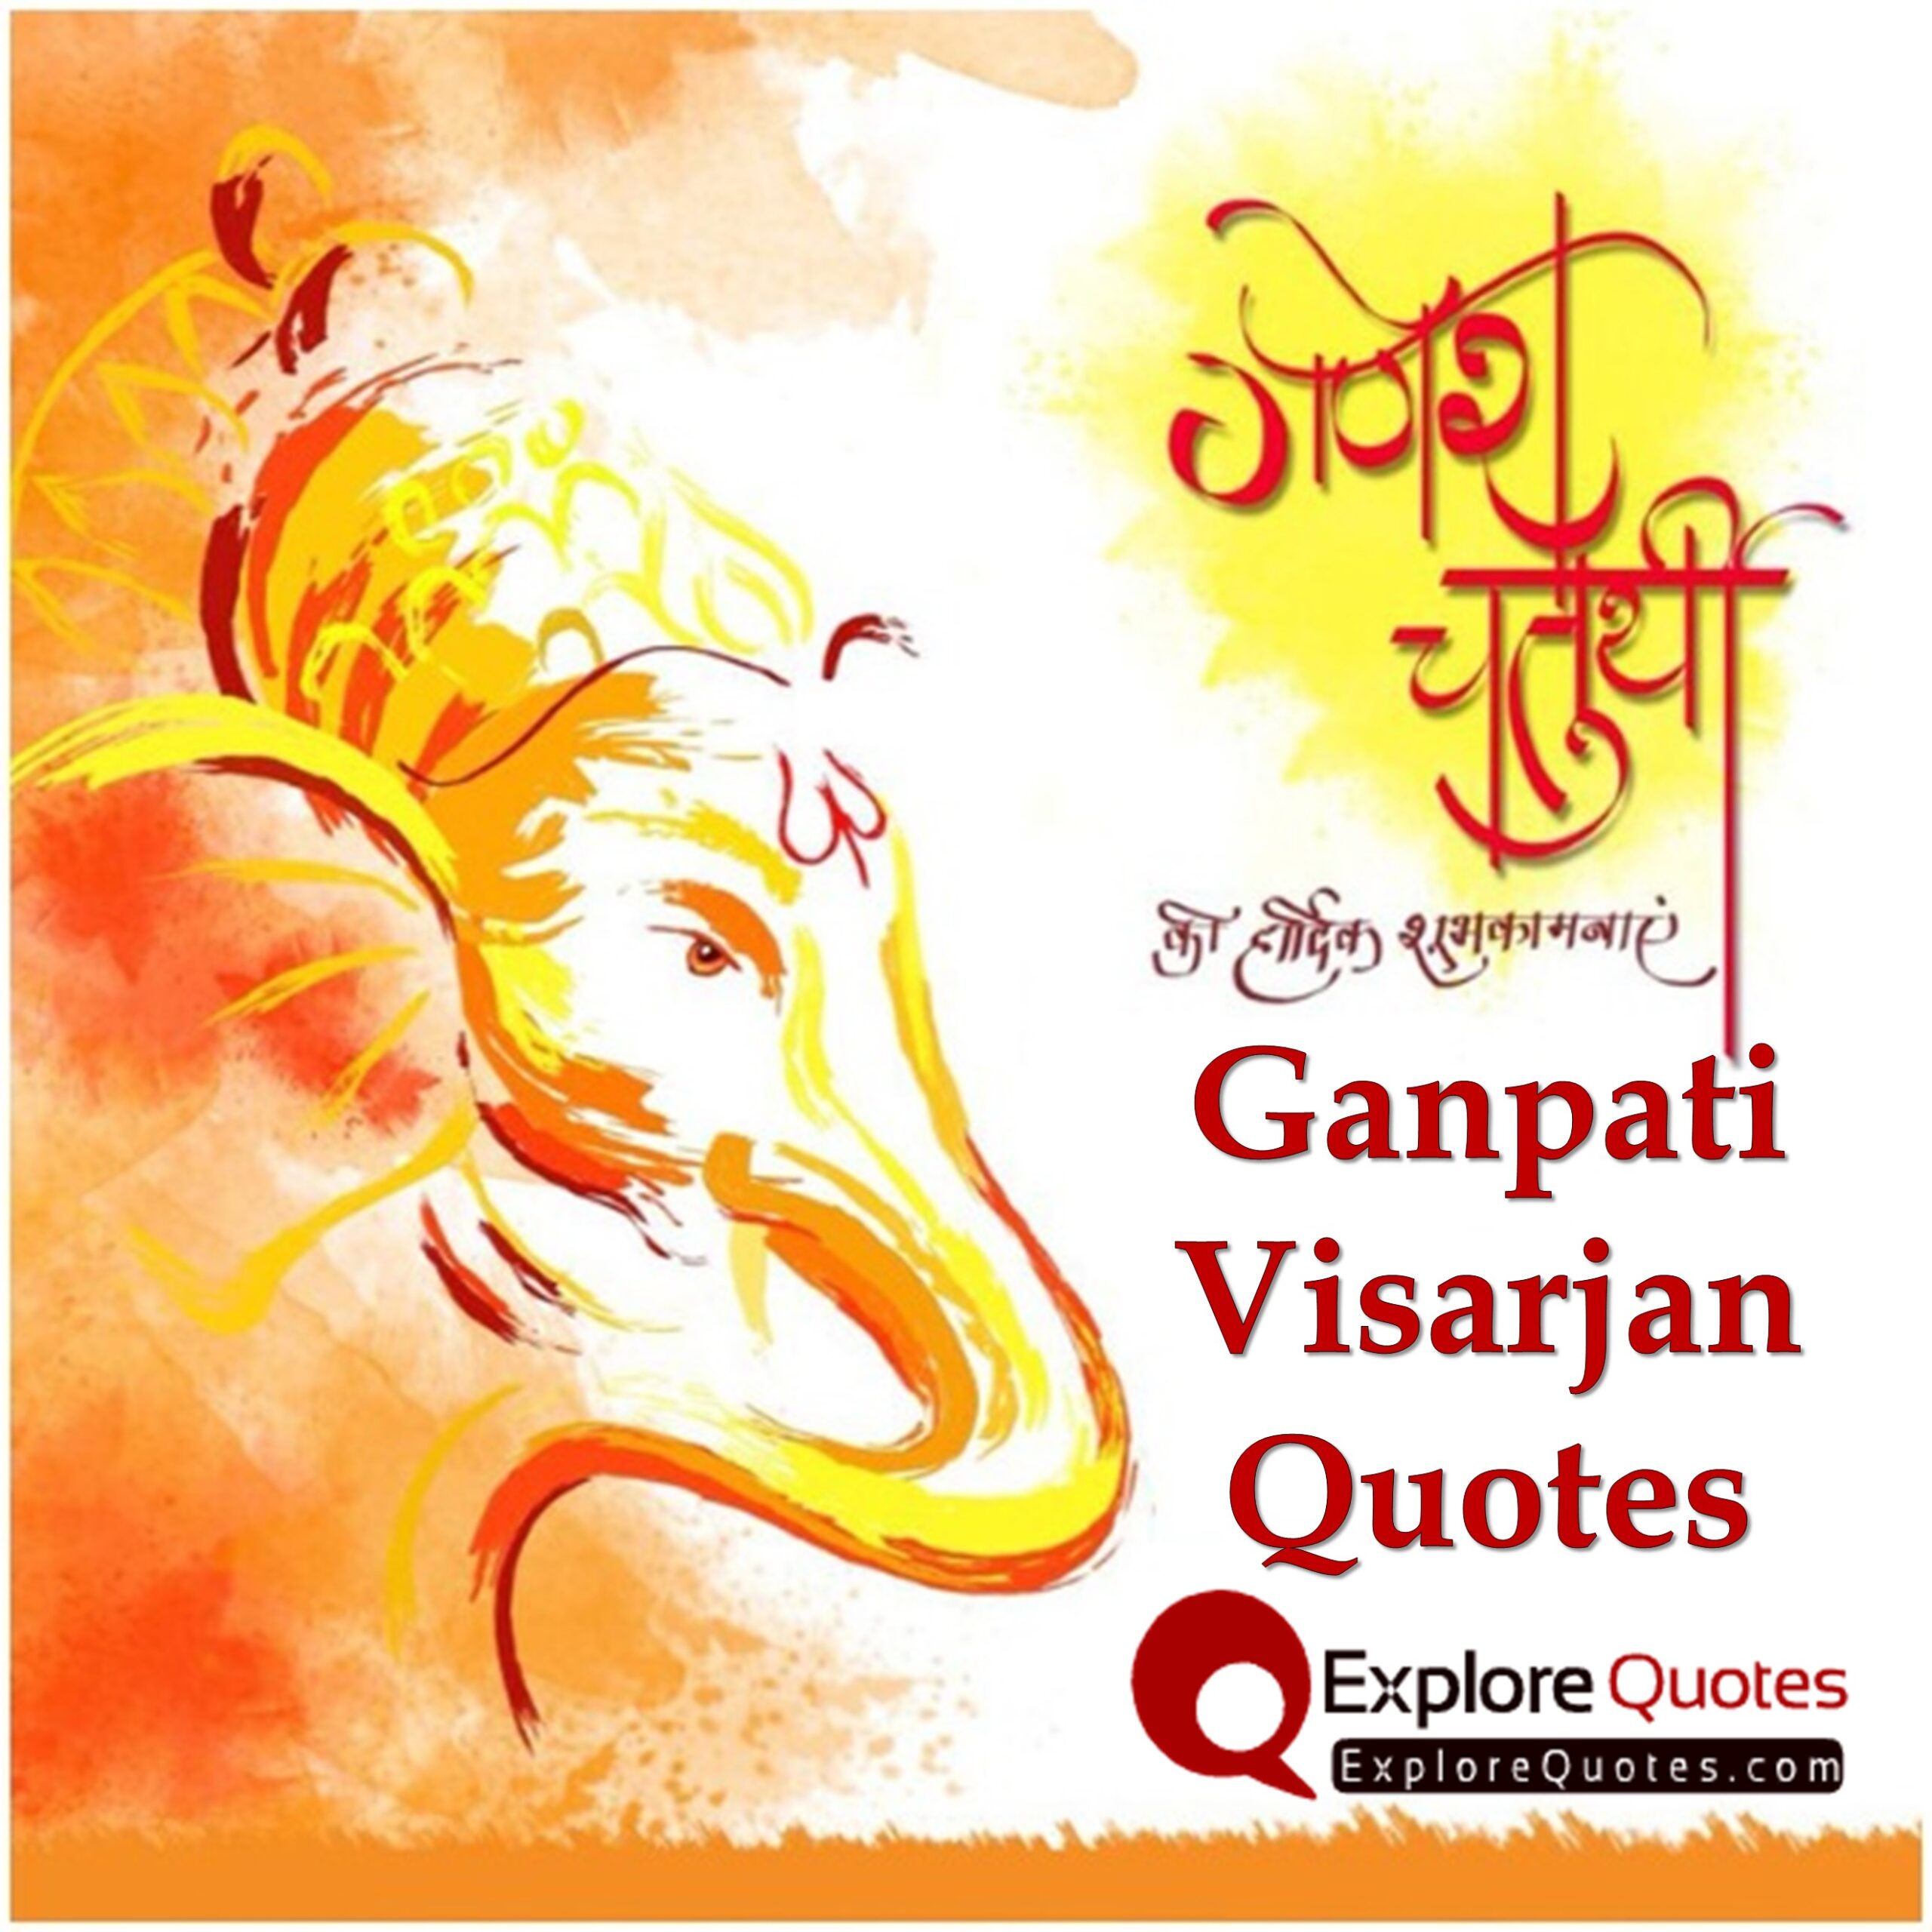 Ganpati Visarjan Quotes